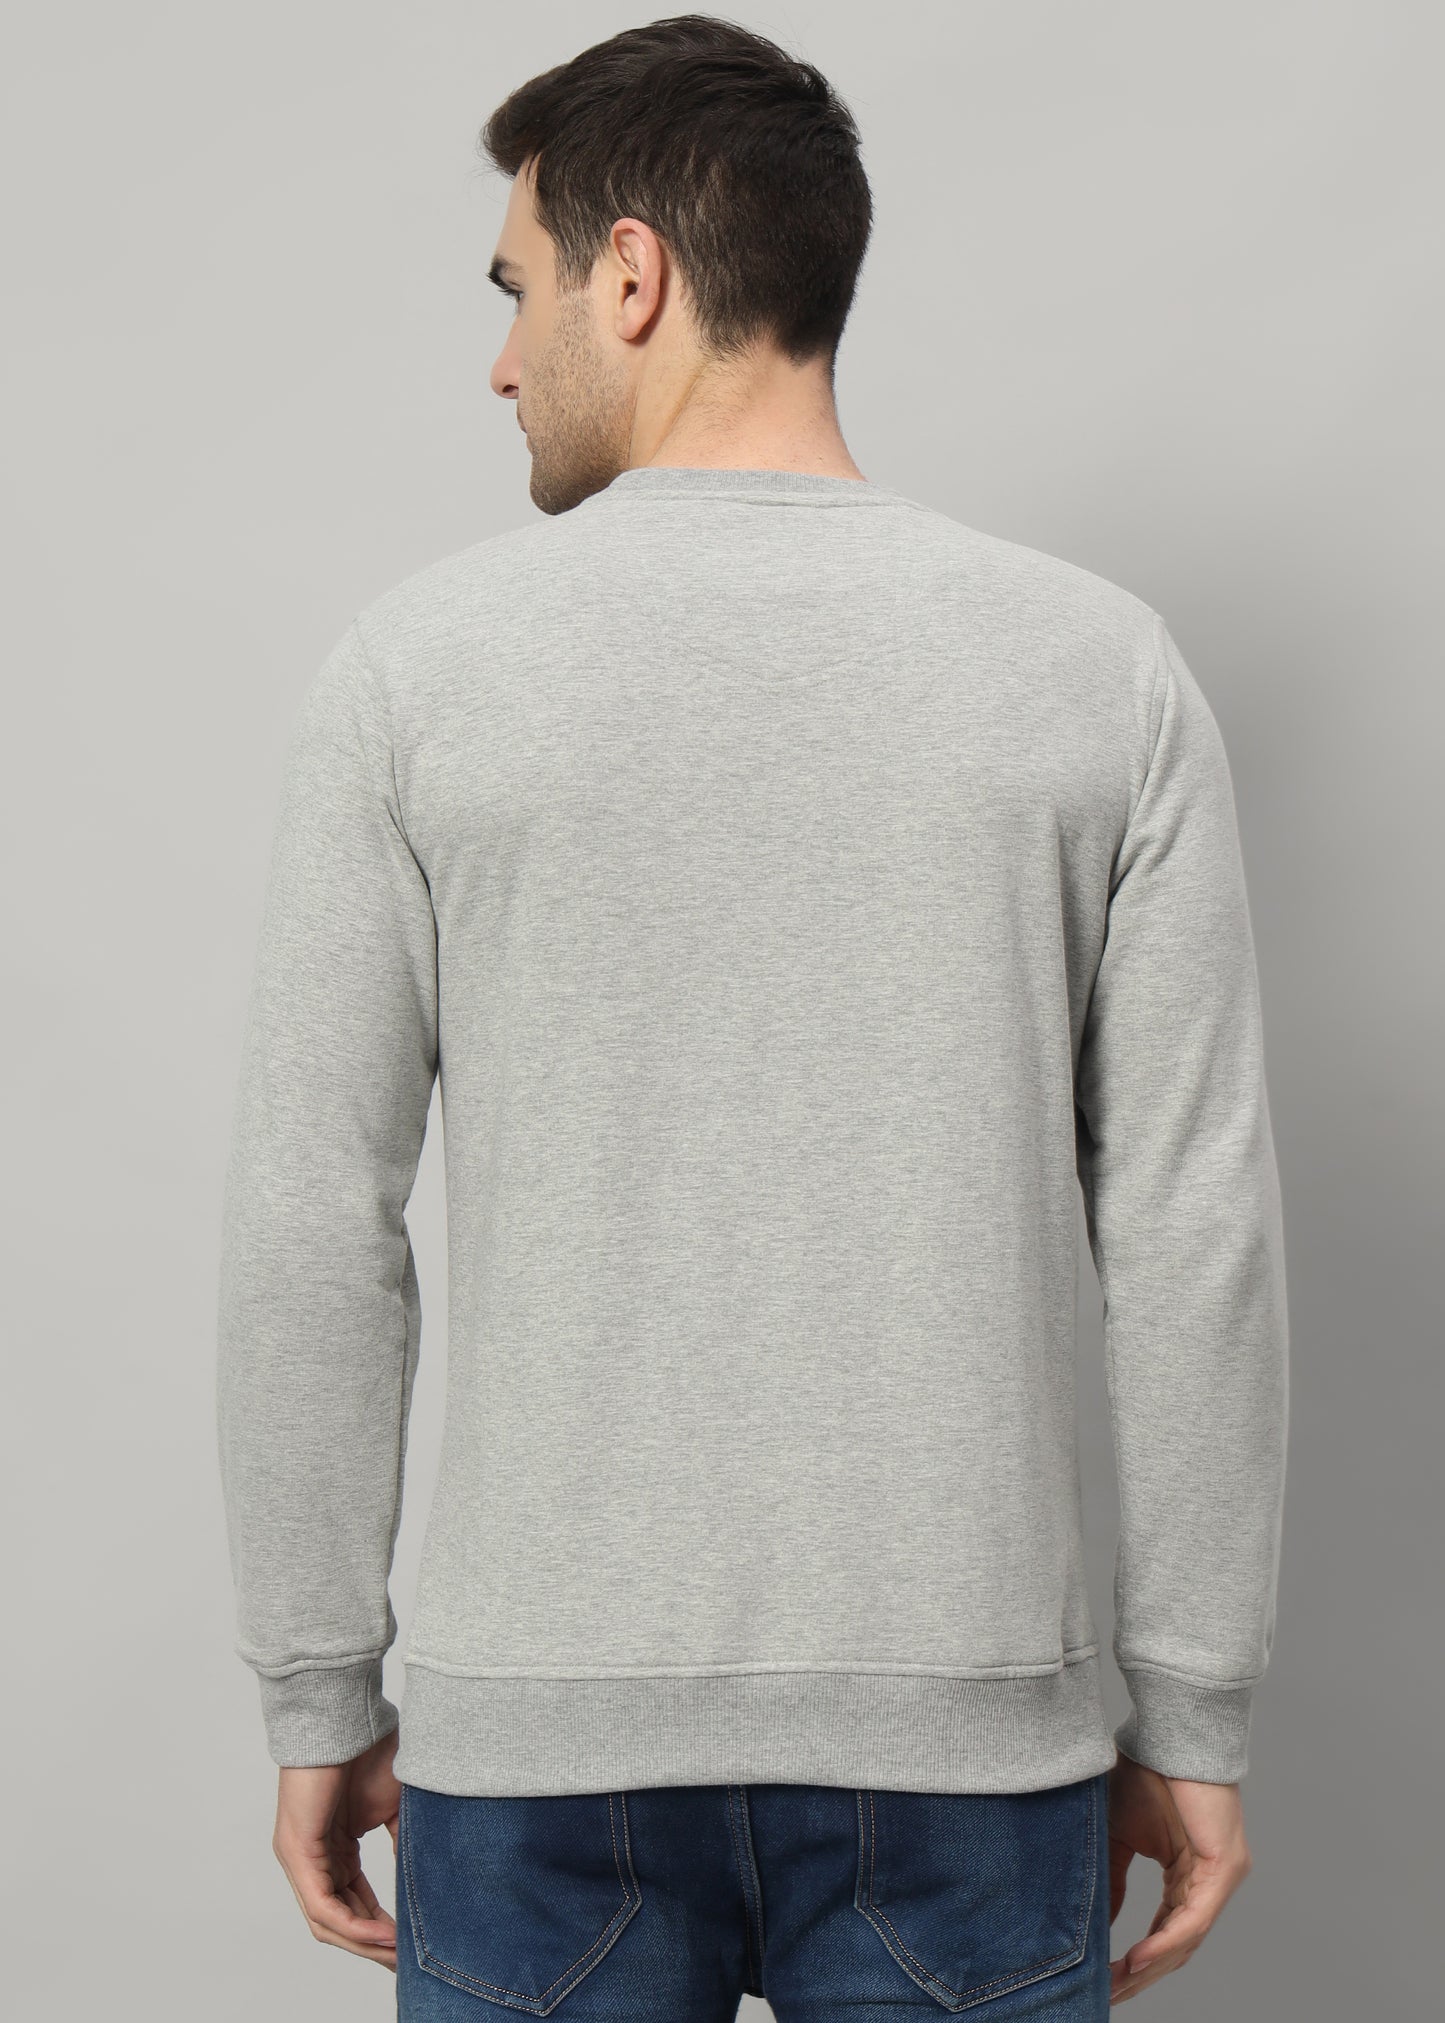 Full Sleeve Cotton Sweat T-Shirt for Men's